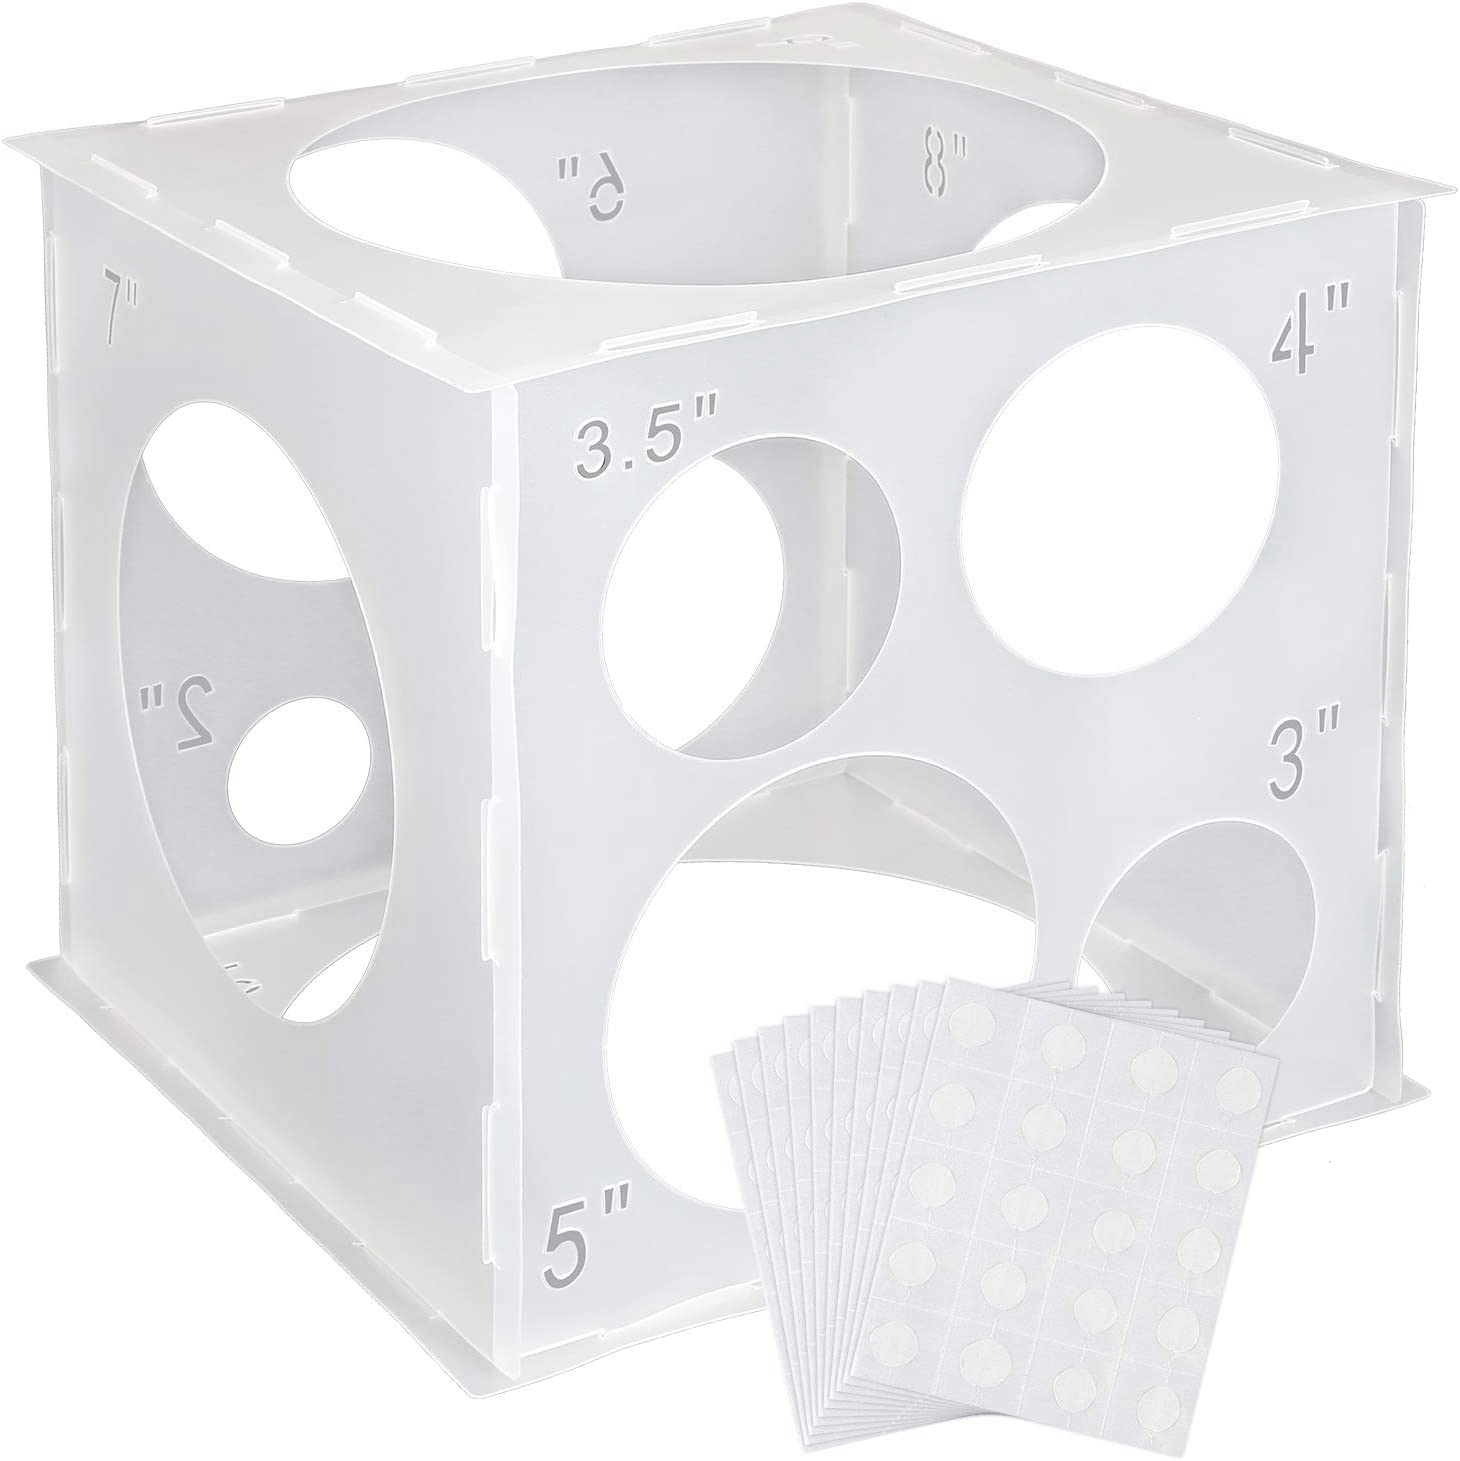 Measurement Tool Cube Transparent Balloon Sizer Box